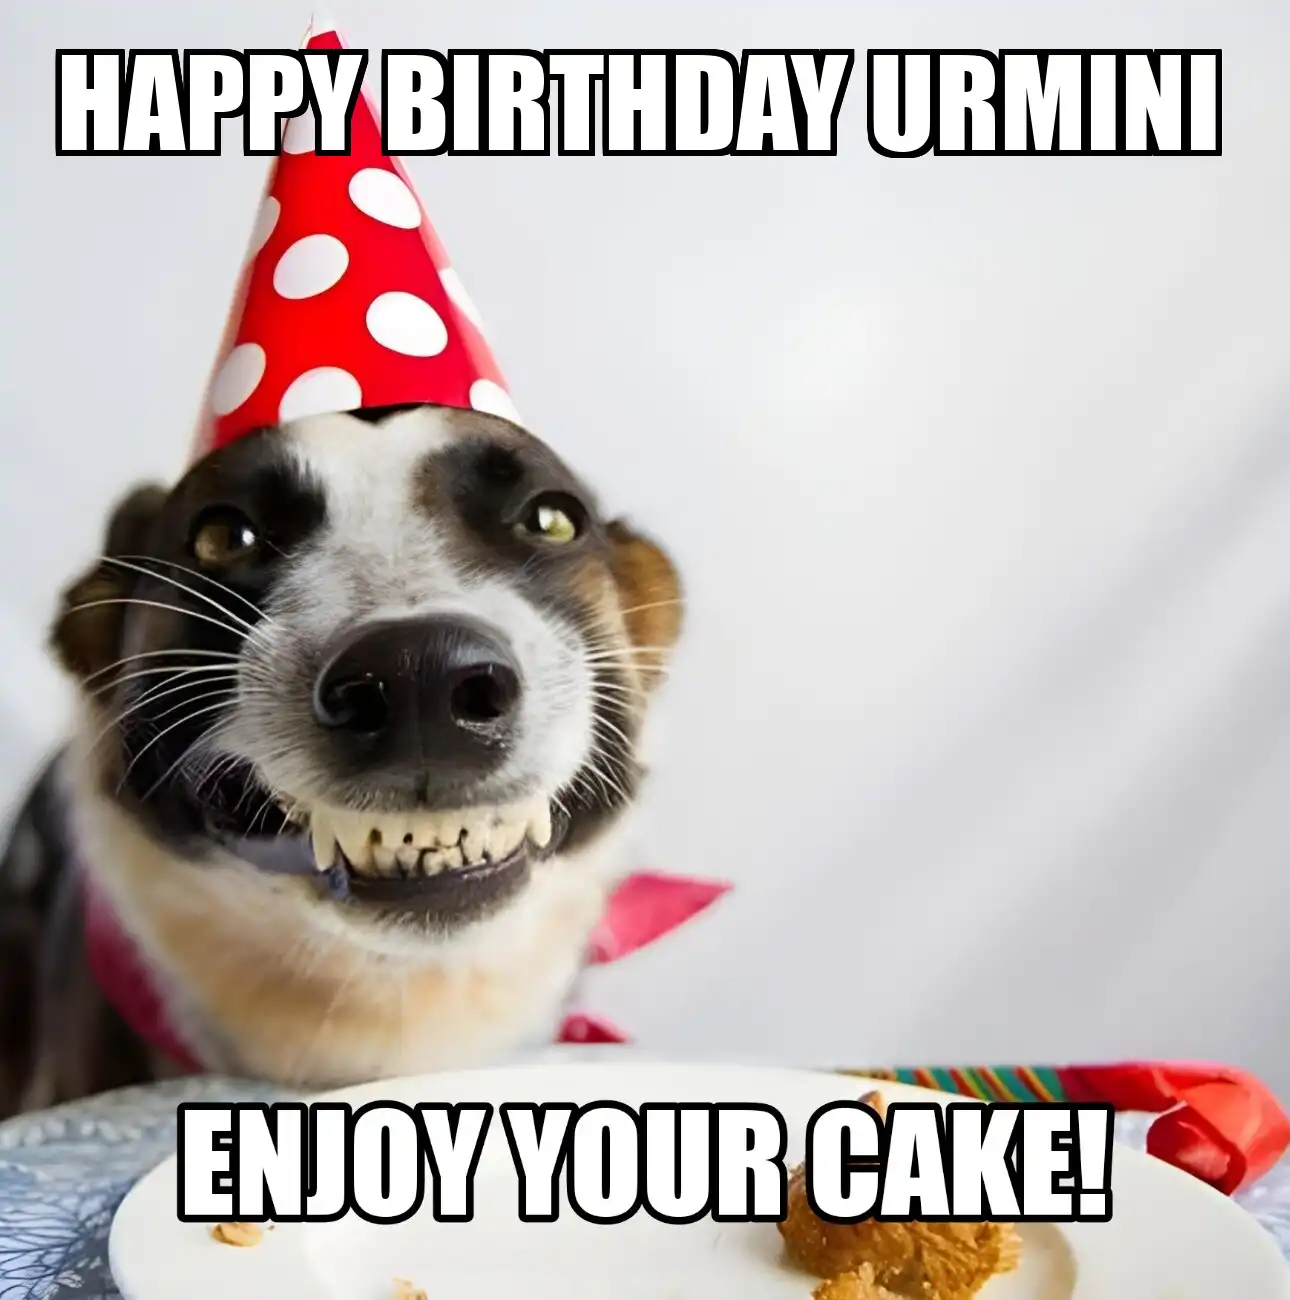 Happy Birthday Urmini Enjoy Your Cake Dog Meme